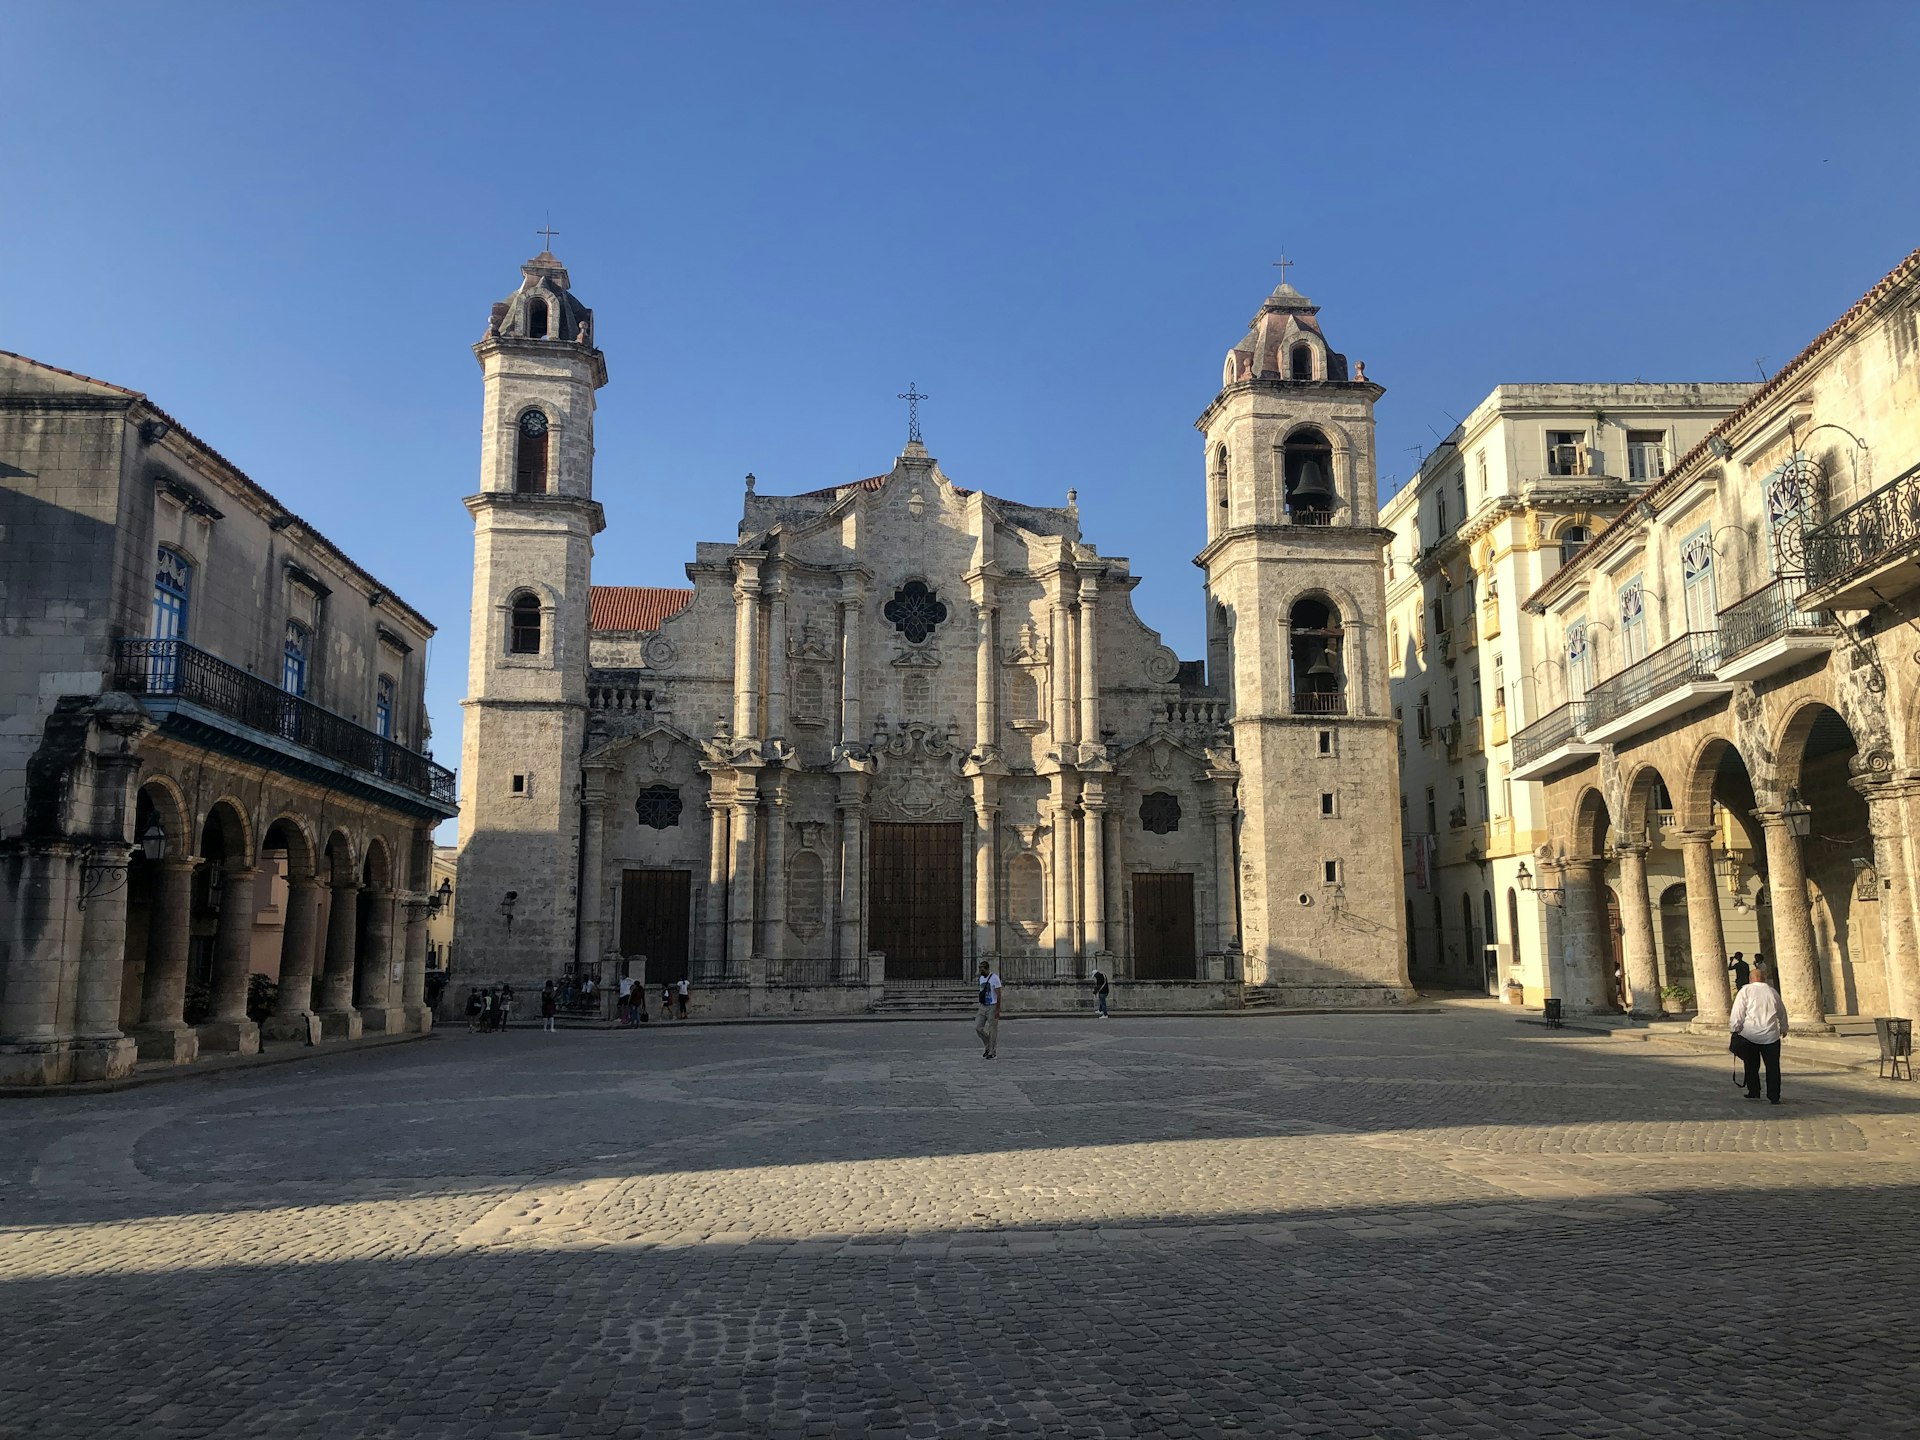 A quiet afternoon at Plaza de la Catedral, Havana